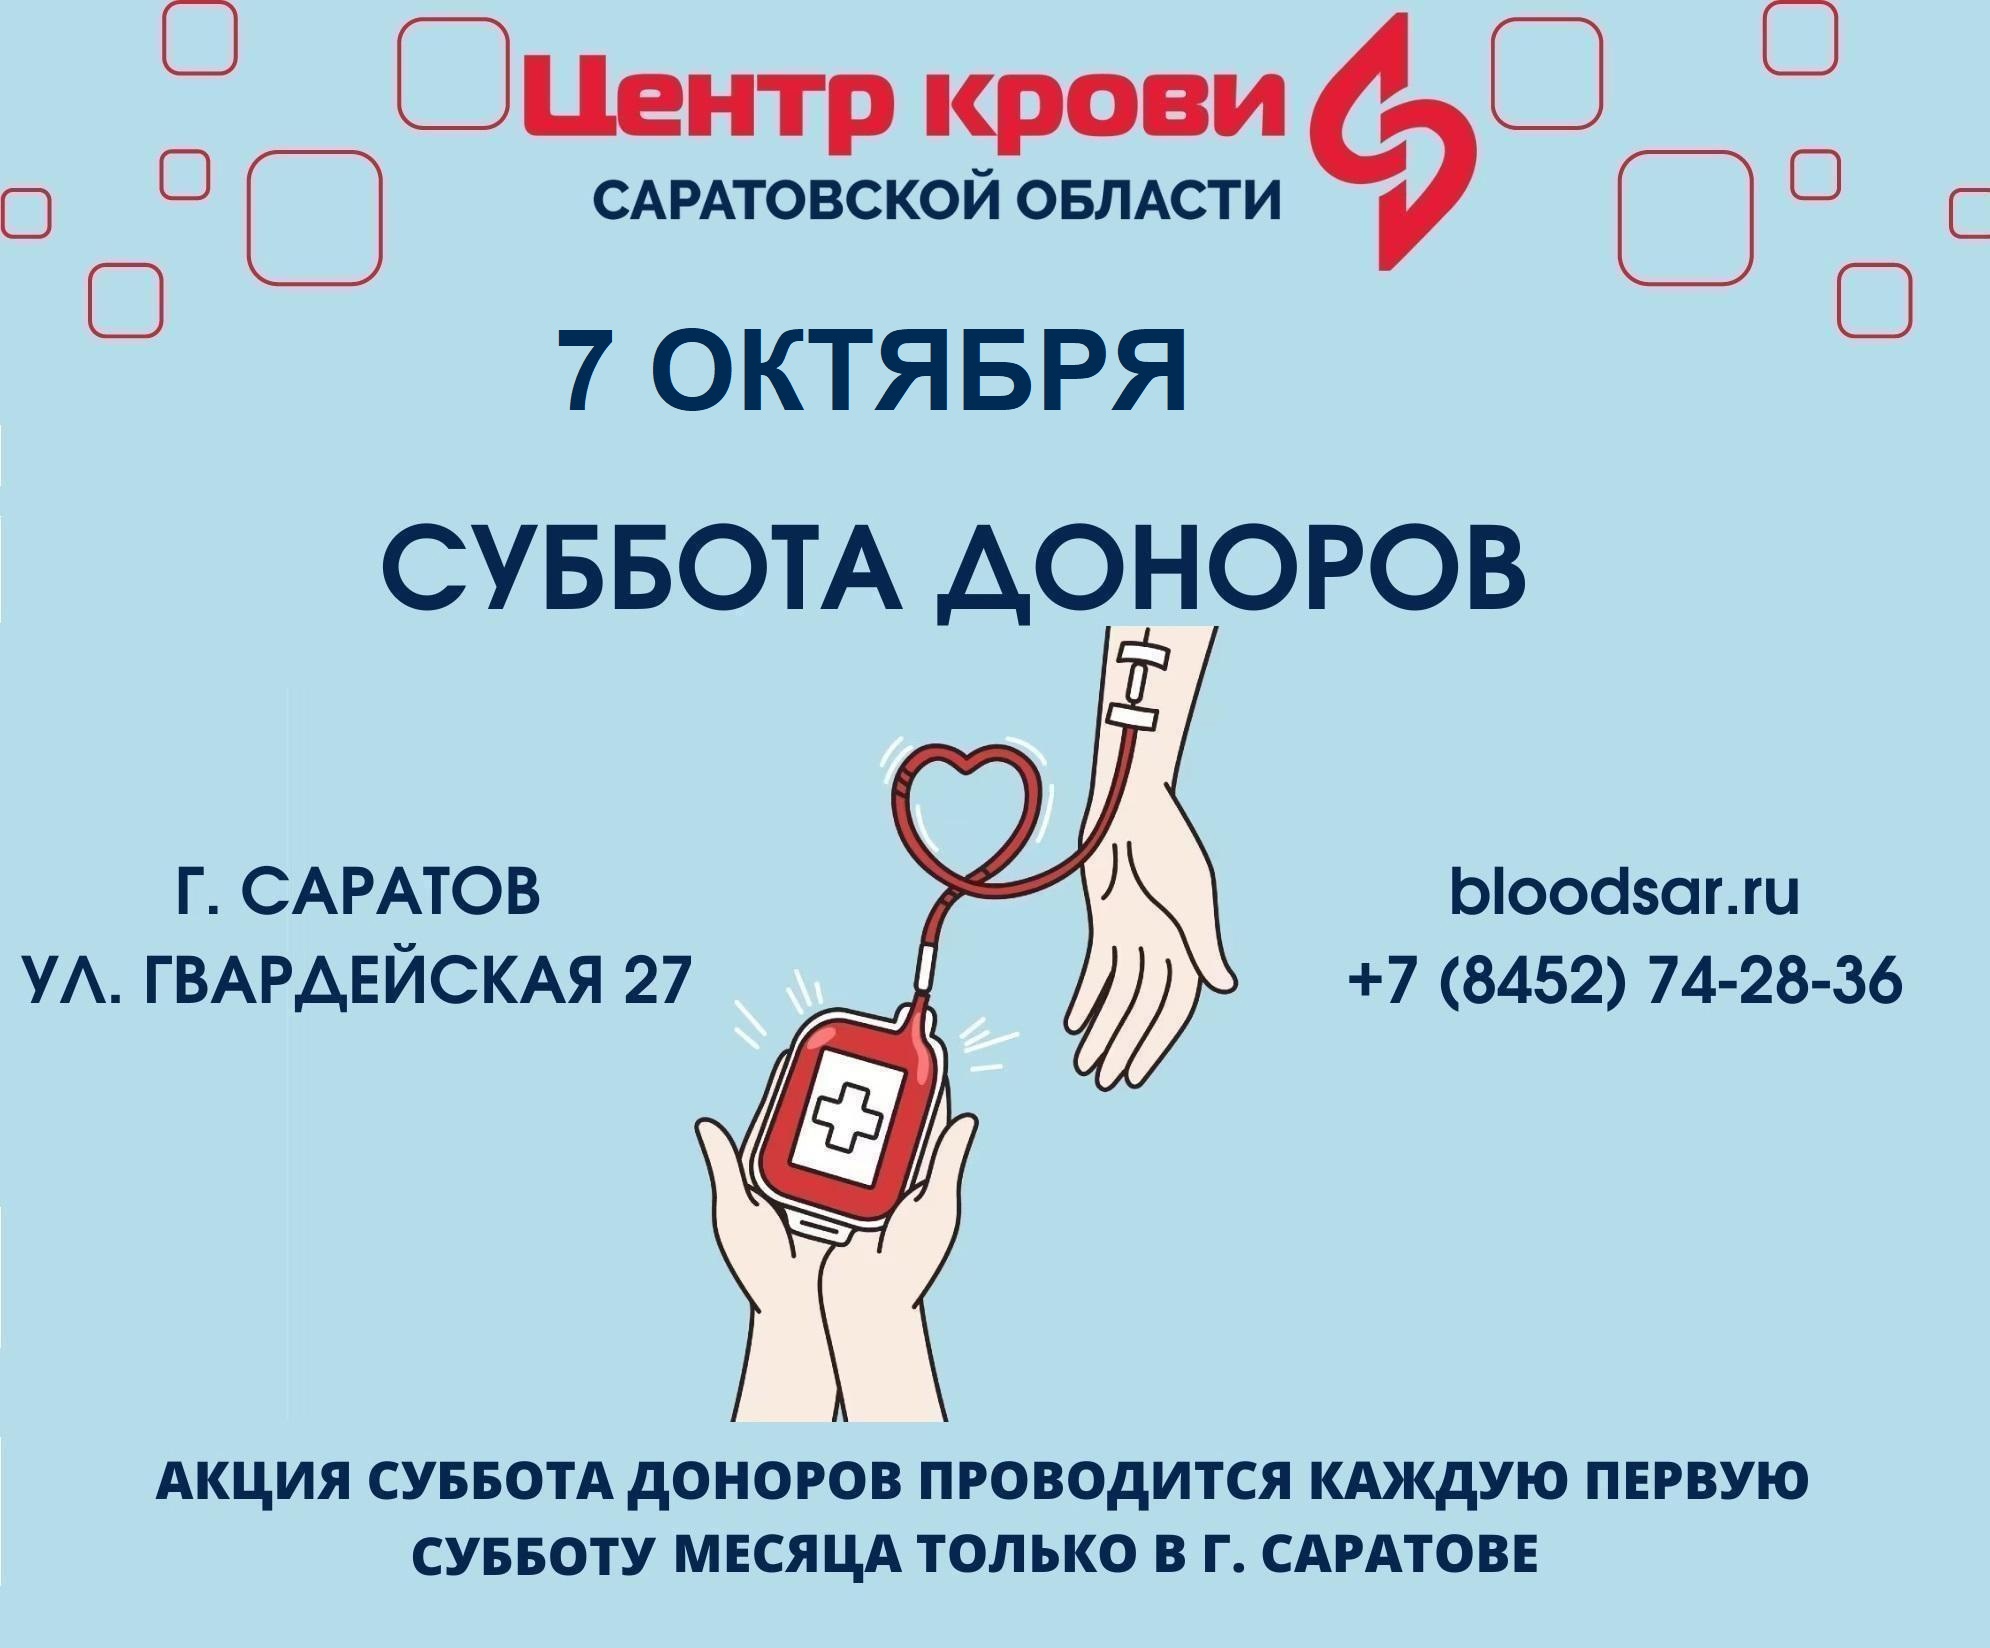 Донорство в субботу. Донорство крови. Донорский центр Саратов. Суббота донора картинки. Плакат донорская суббота.